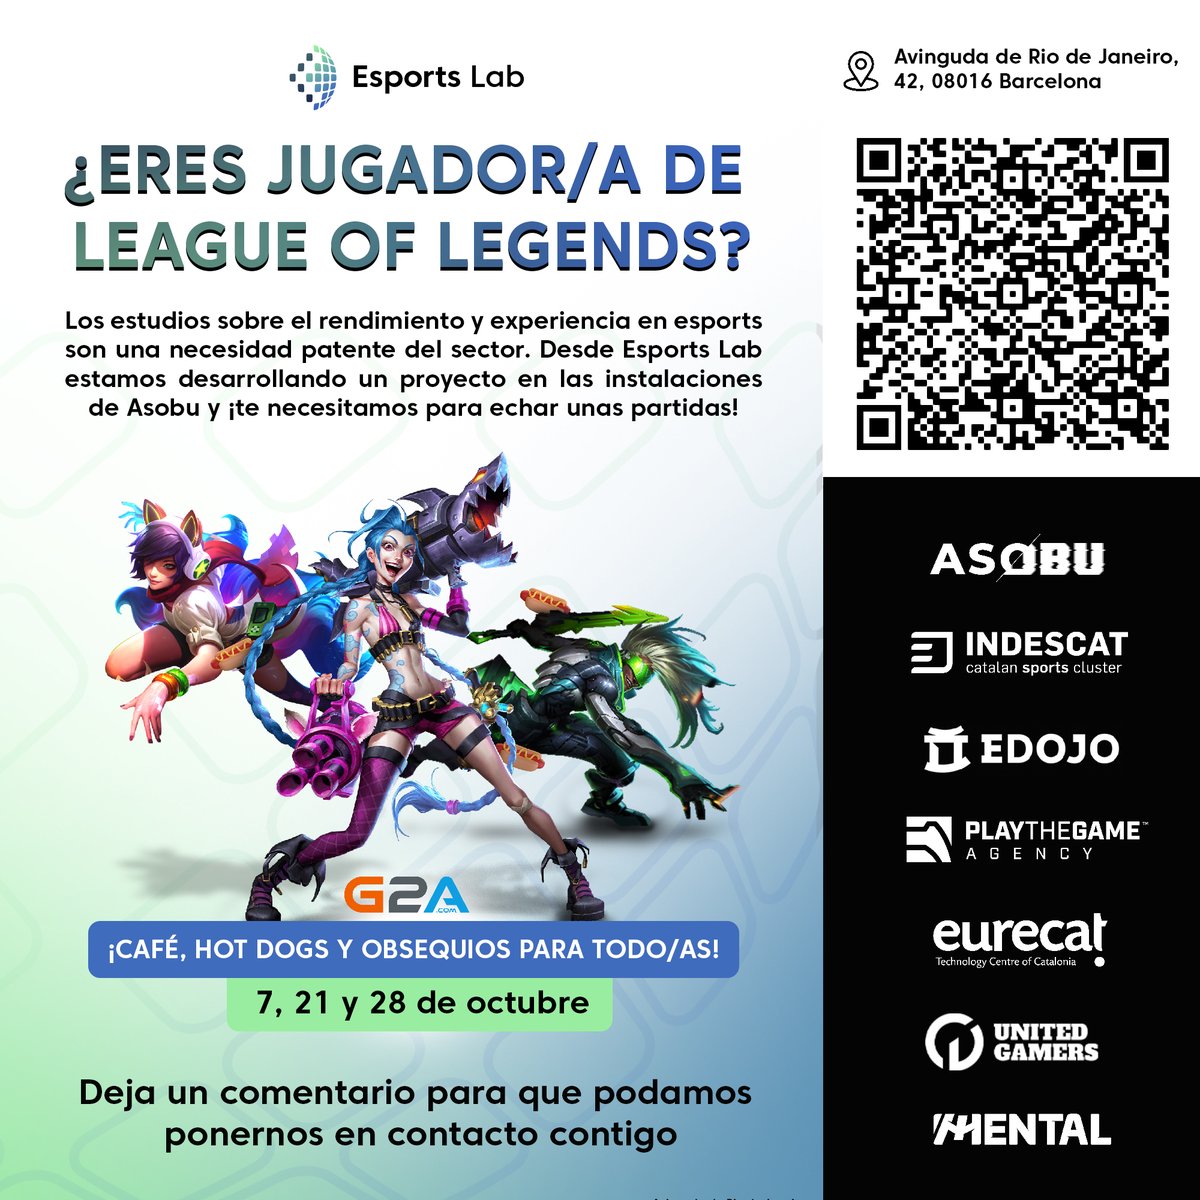 ¿Eres jugador/a de League of Legends? ¿Vives cerca de Barcelona? ¡ESTO TE PUEDE INTERESAR! 👇👇👇